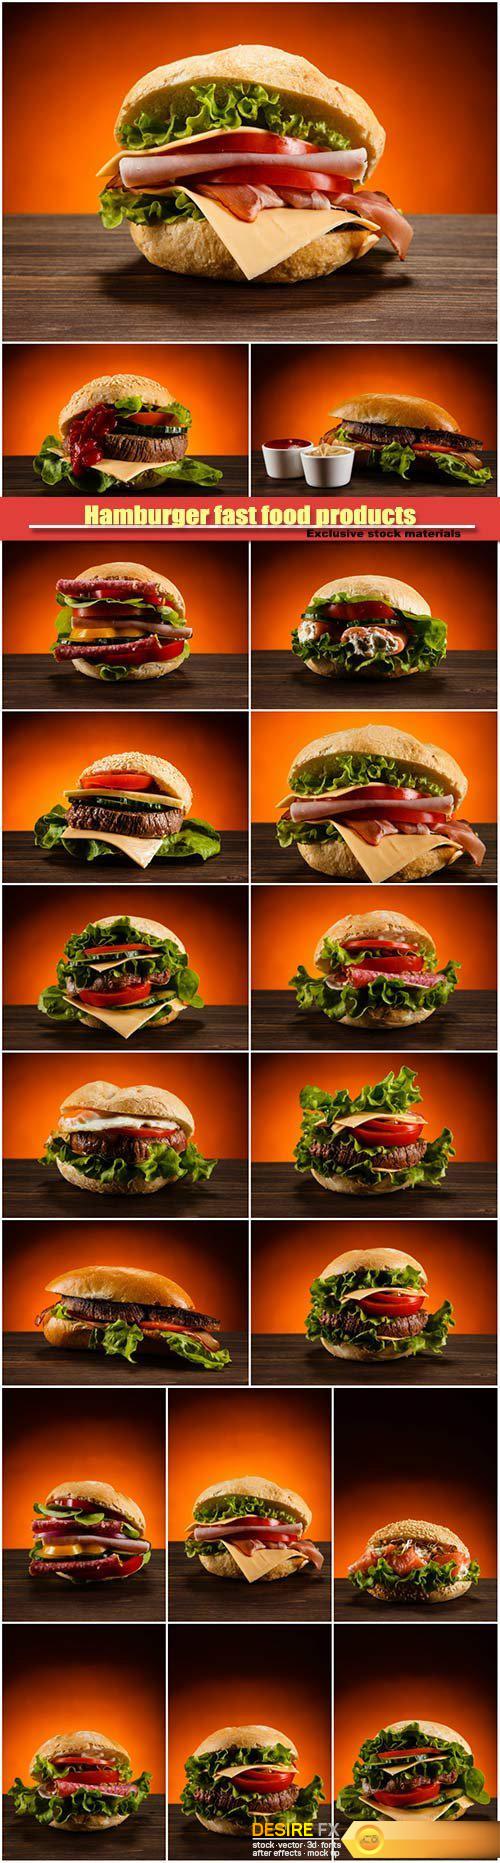 Hamburger fast food products